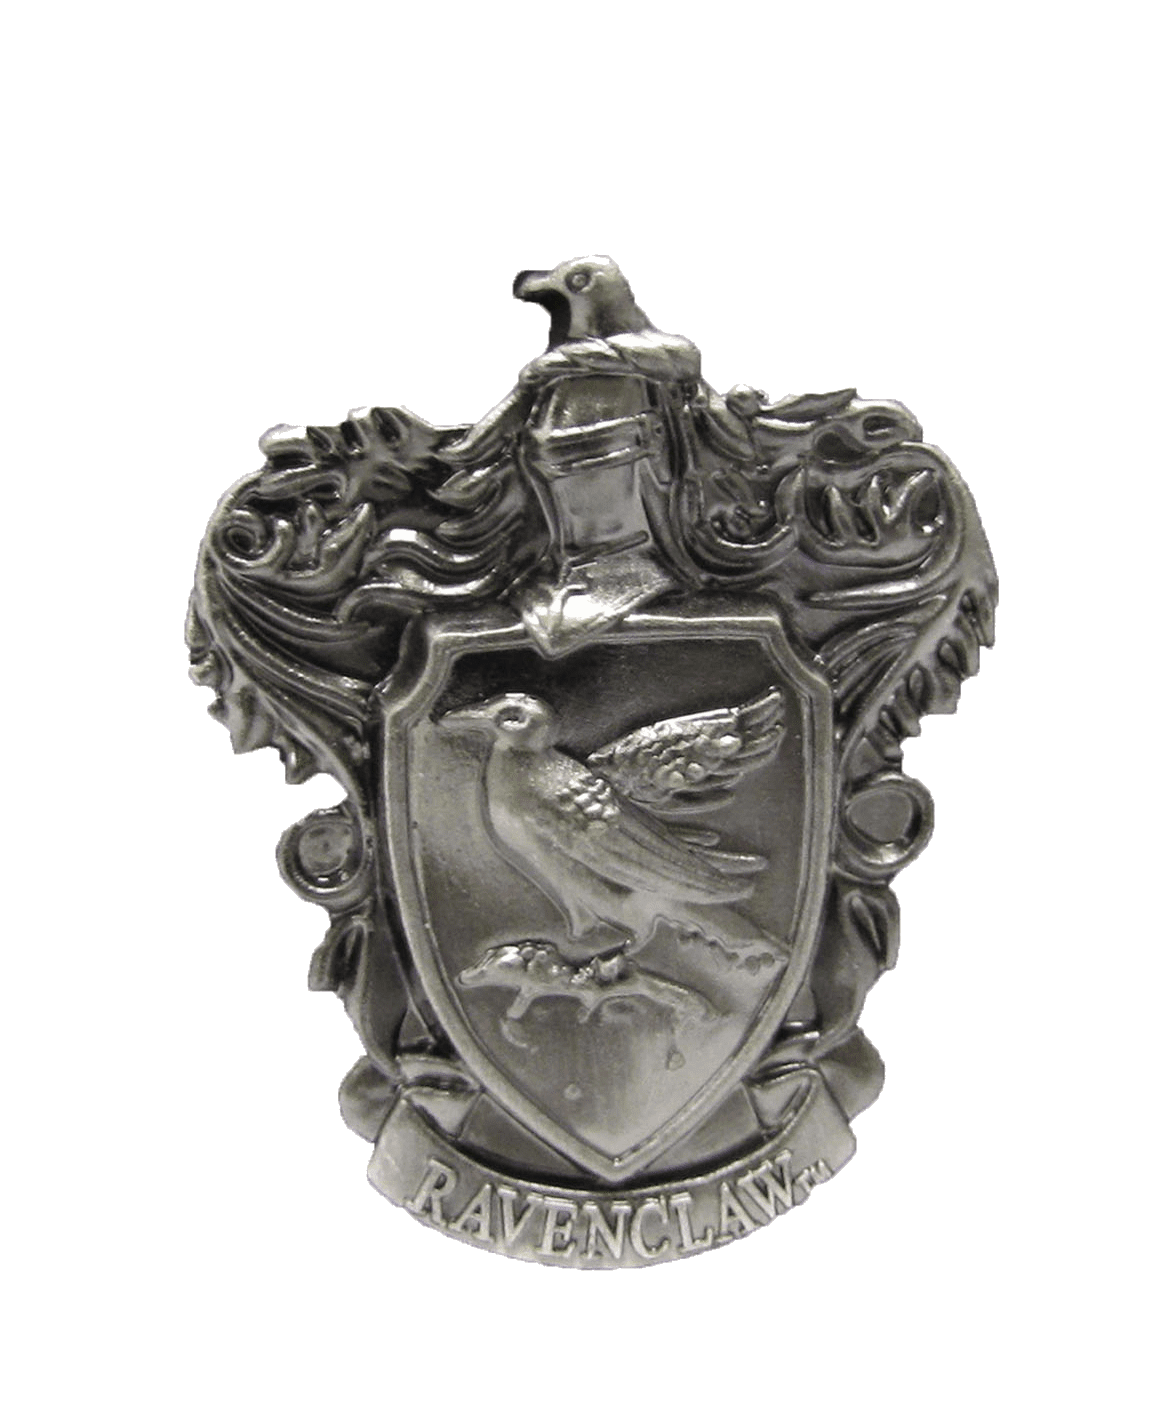 Pin PYRAMID Harry Potter Ravenclaw